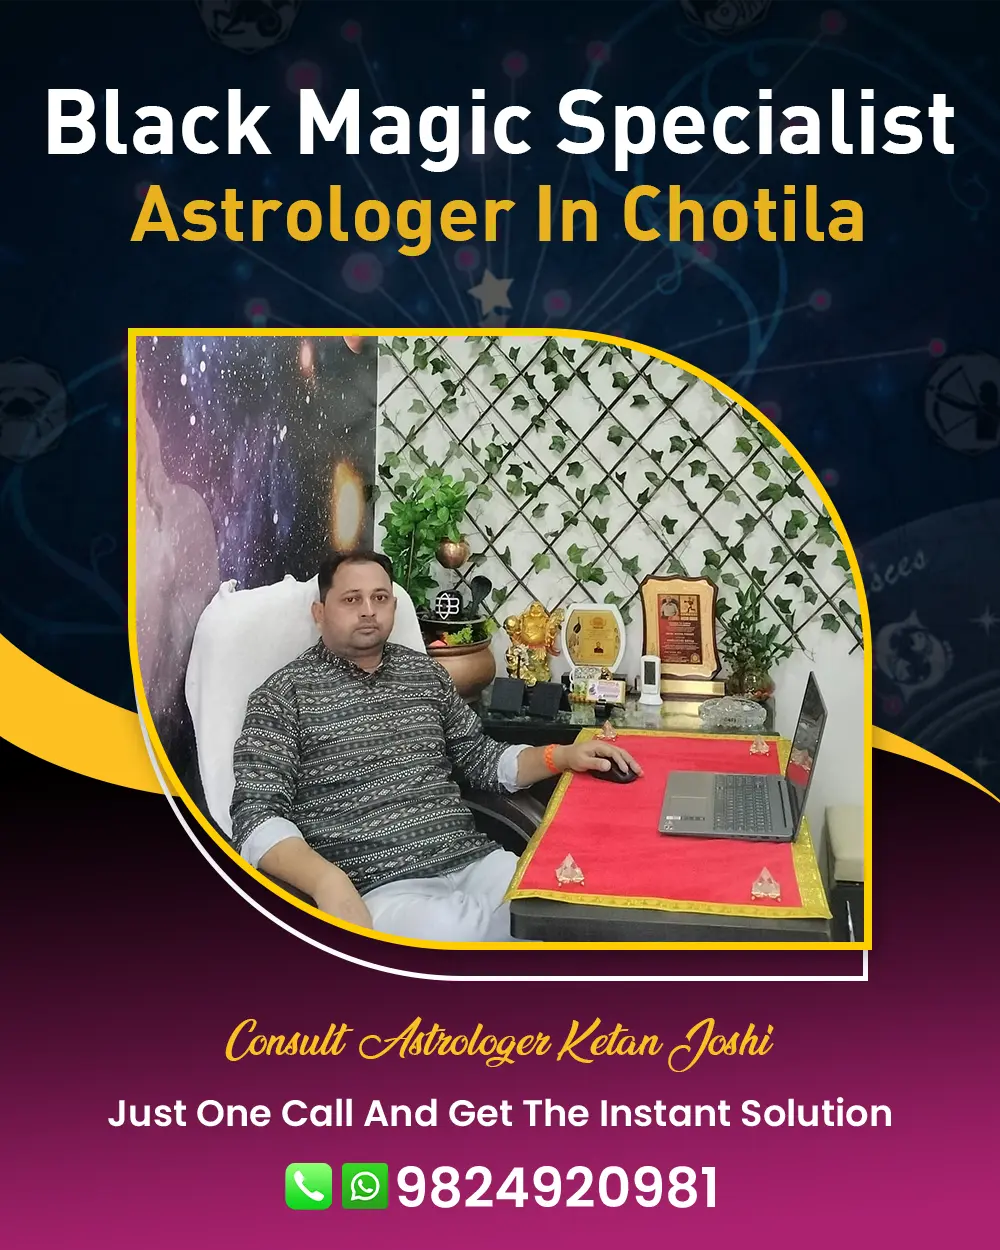 Black Magic Specialist Astrologer In Chotila